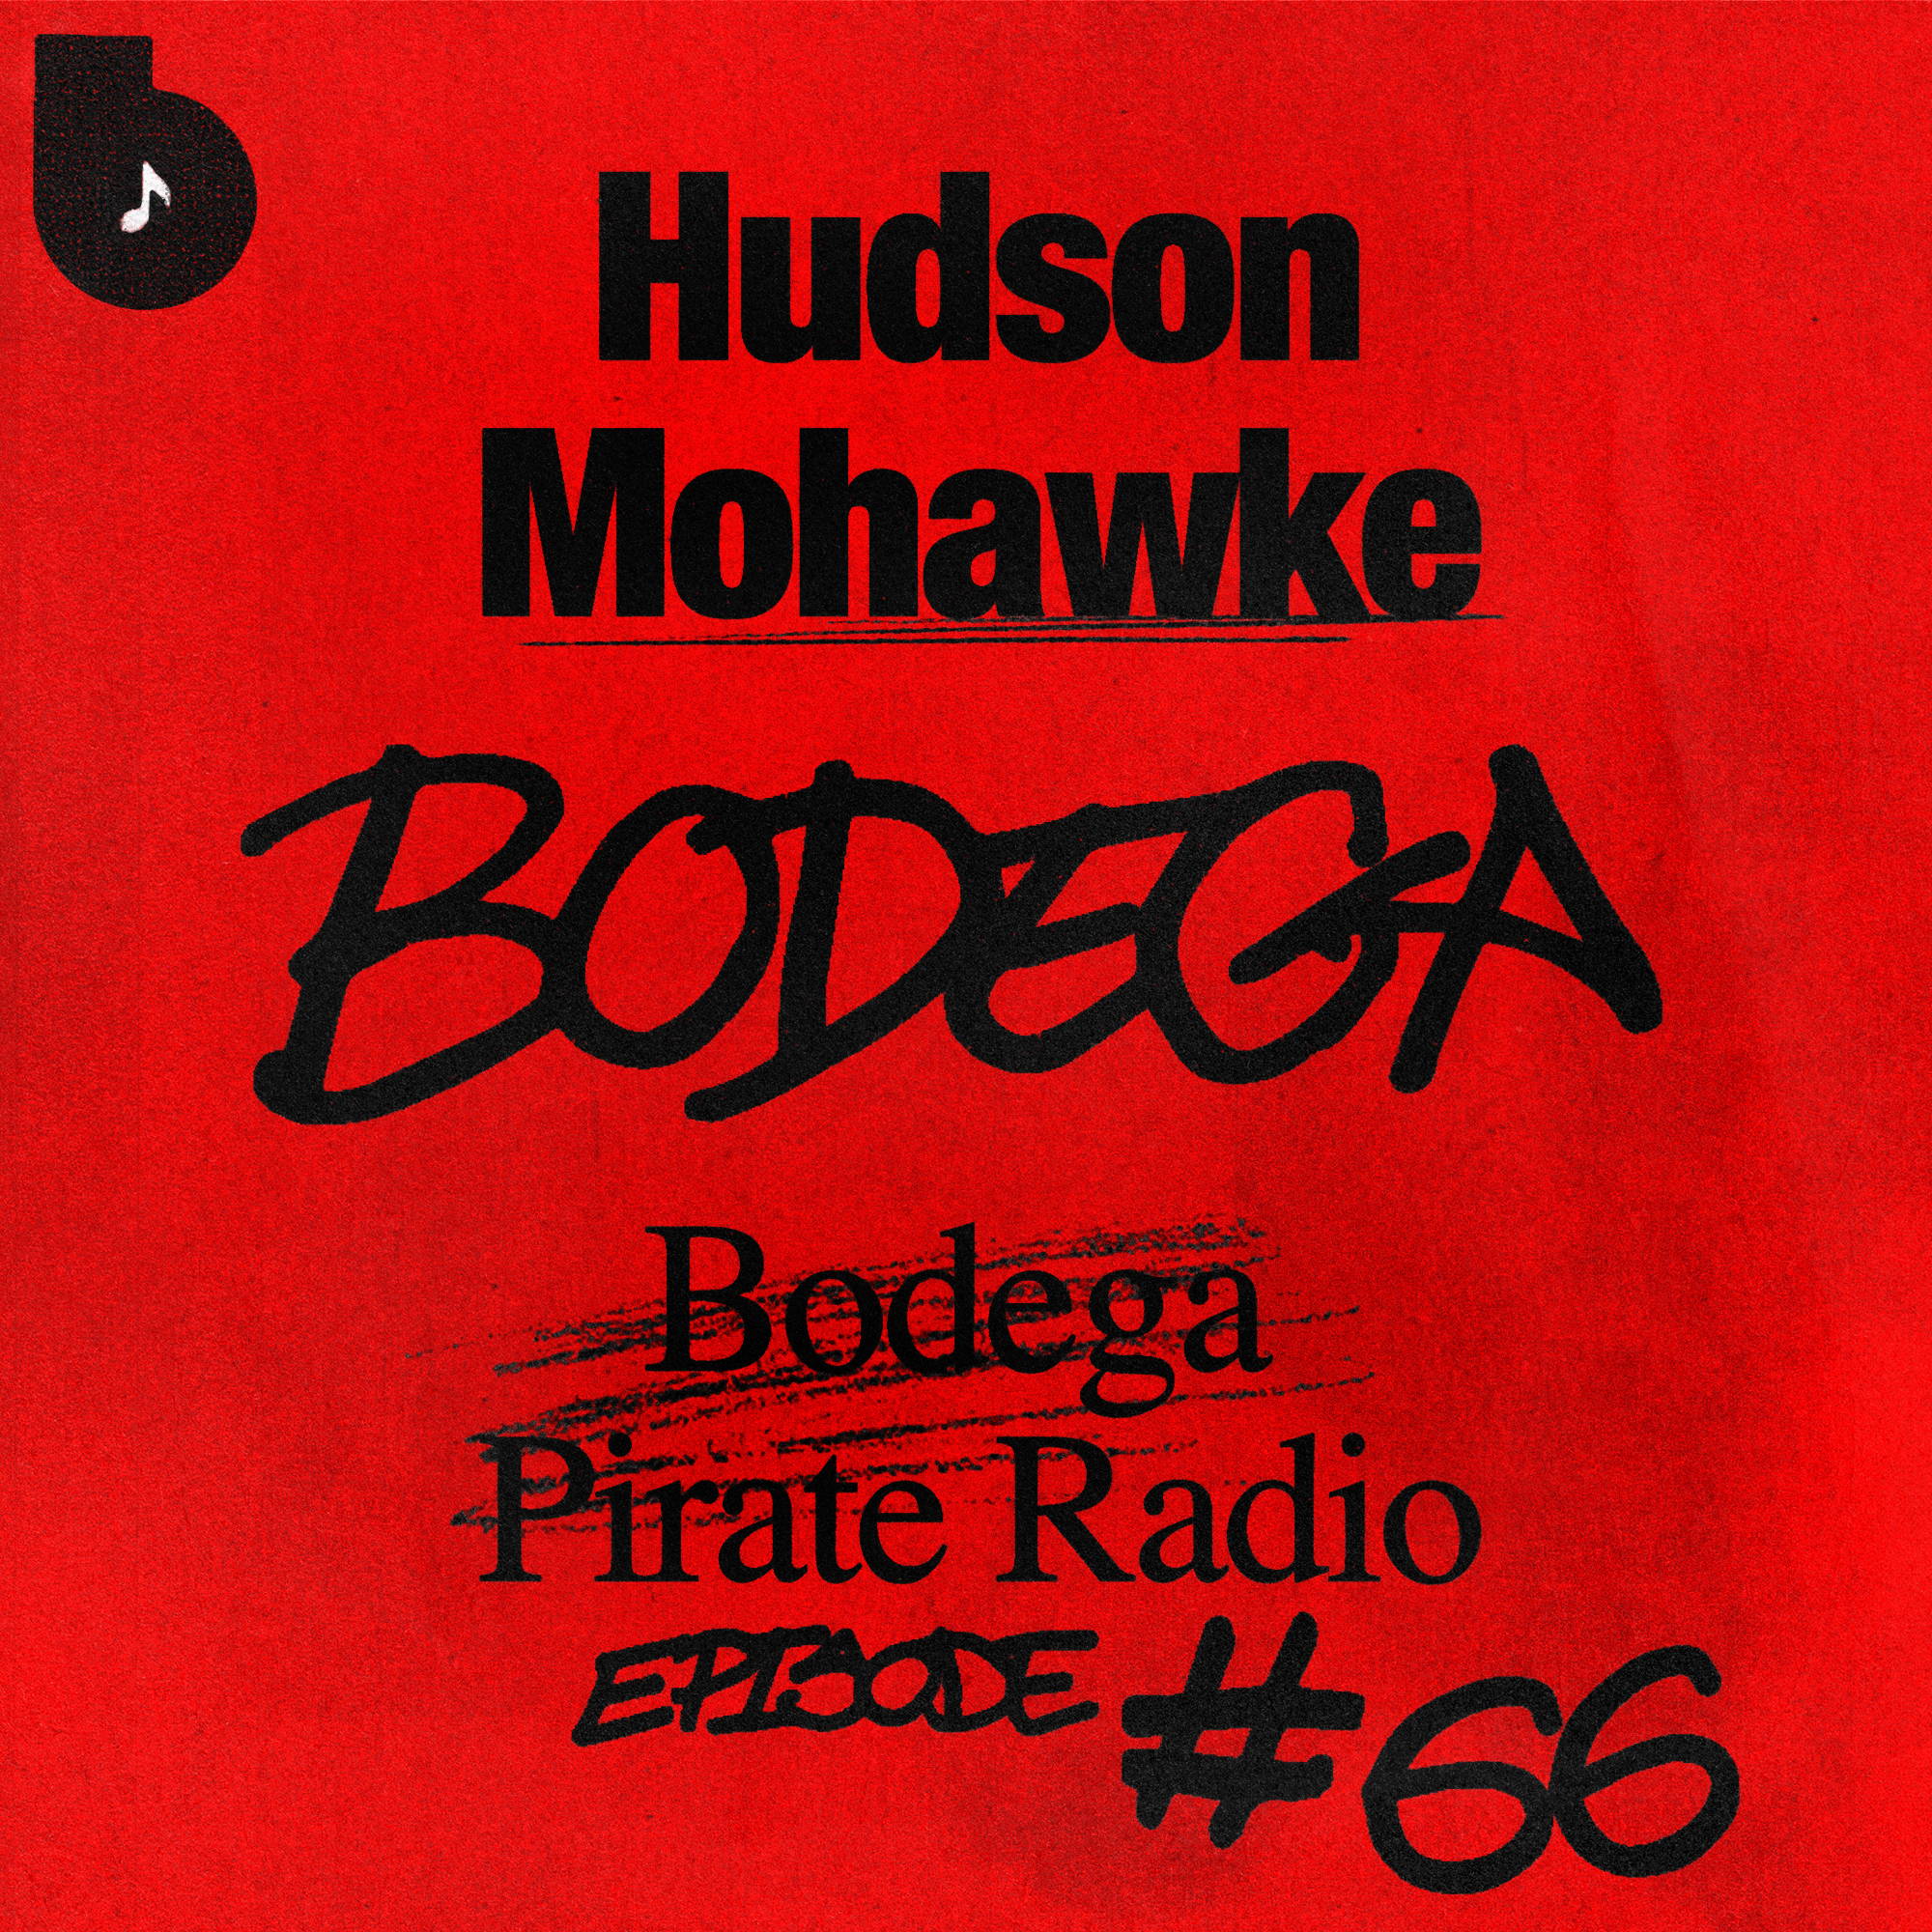 Bodega Pirate Radio: EP #66 - Hudson Mohawke